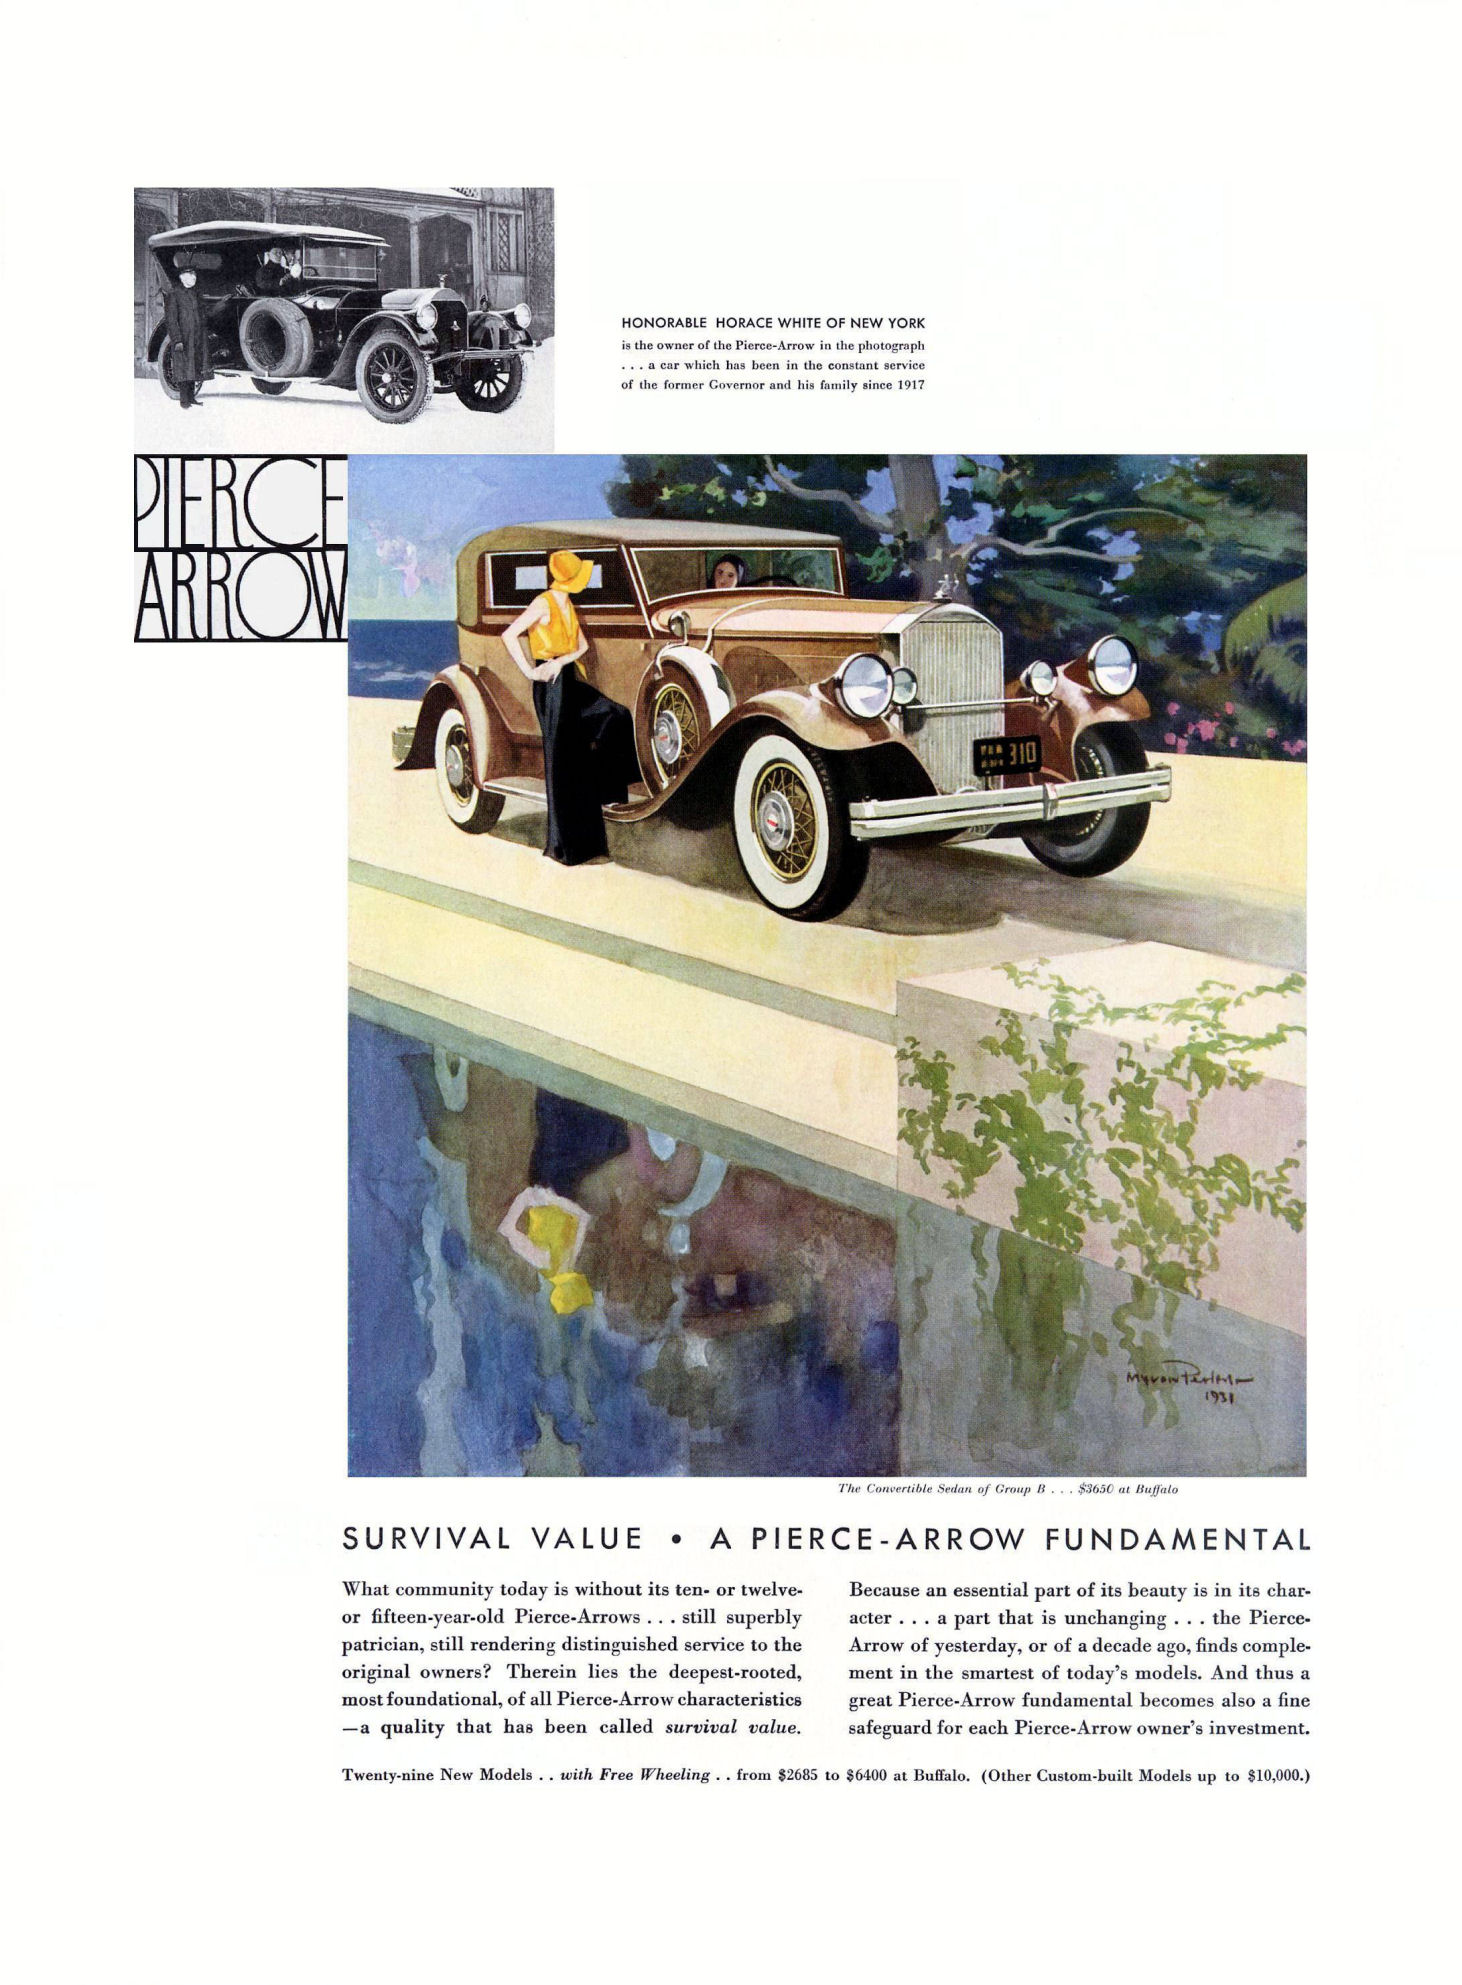 1931 Pierce-Arrow Auto Advertising